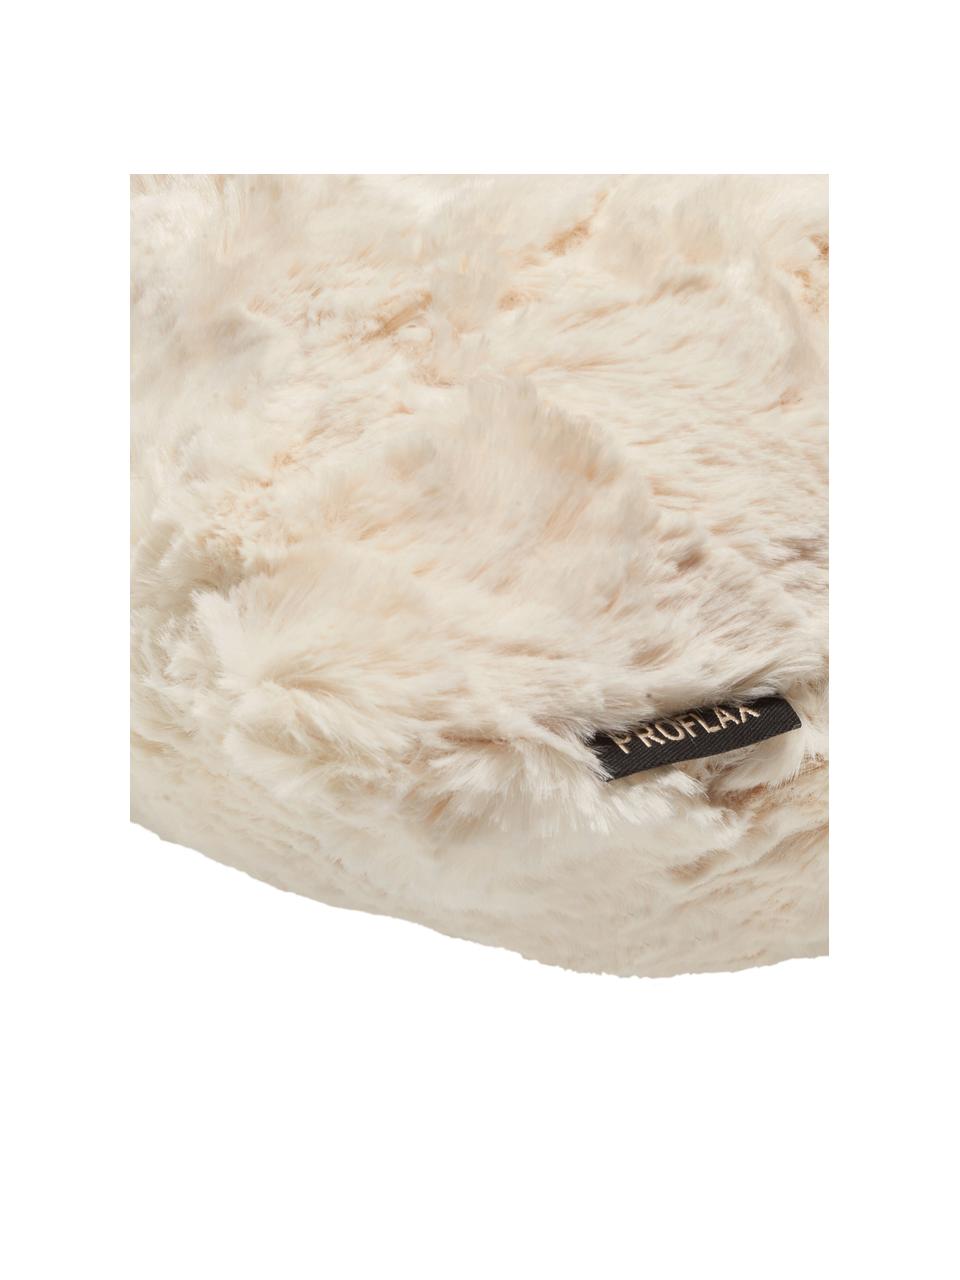 Federa arredo in soffice pelliccia sintetica color bianco crema Isis, 100% poliestere, Bianco crema, Larg. 45 x Lung. 45 cm